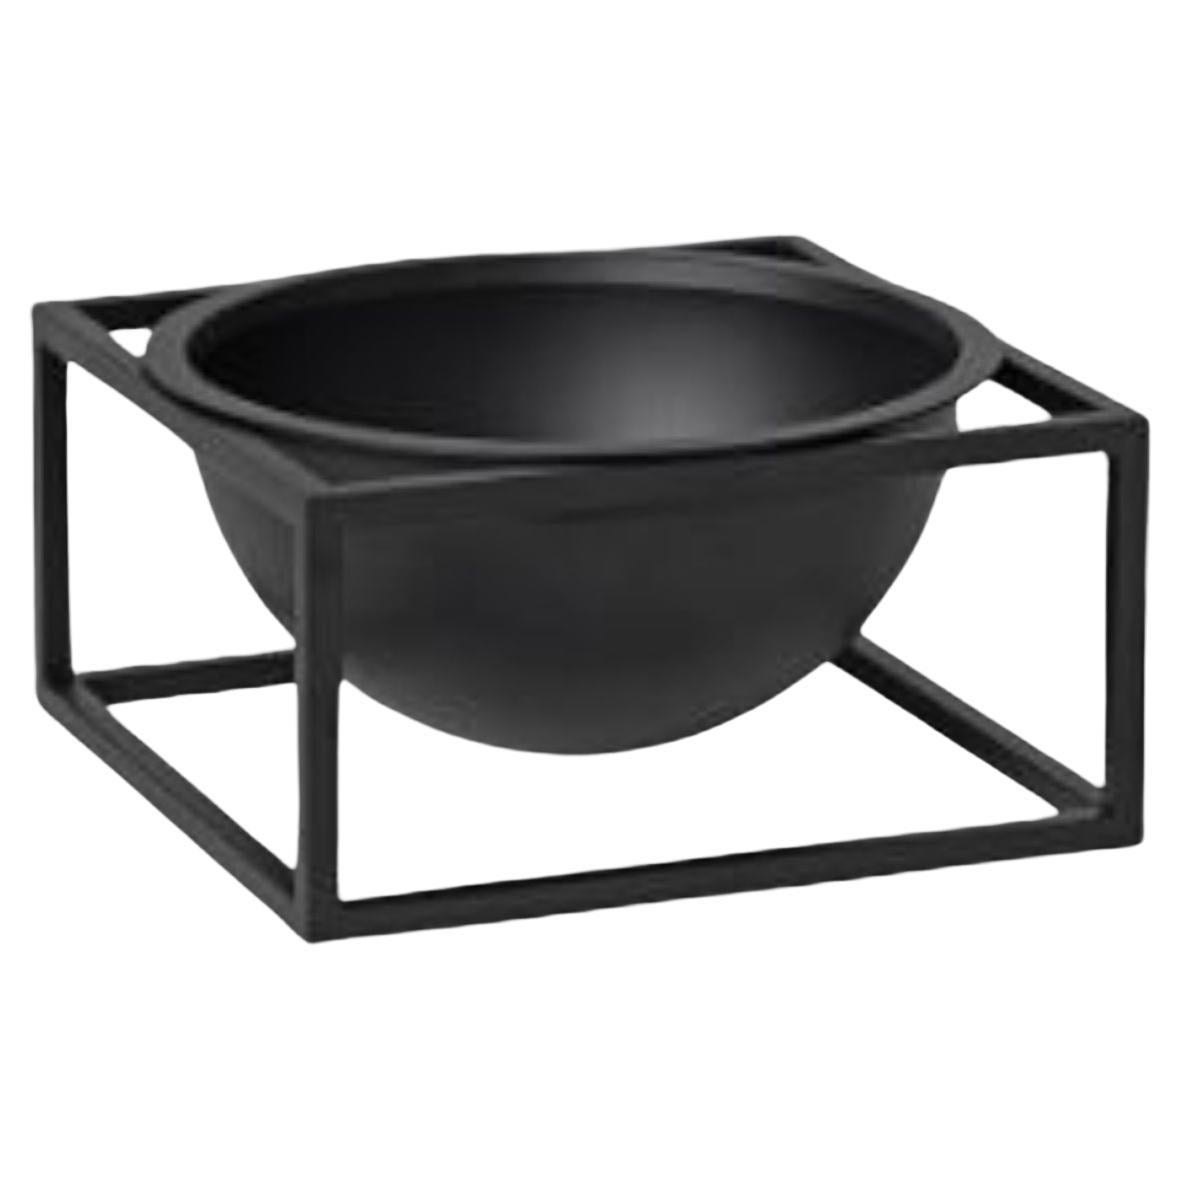 Black Small Centerpiece Kubus Bowl by Lassen